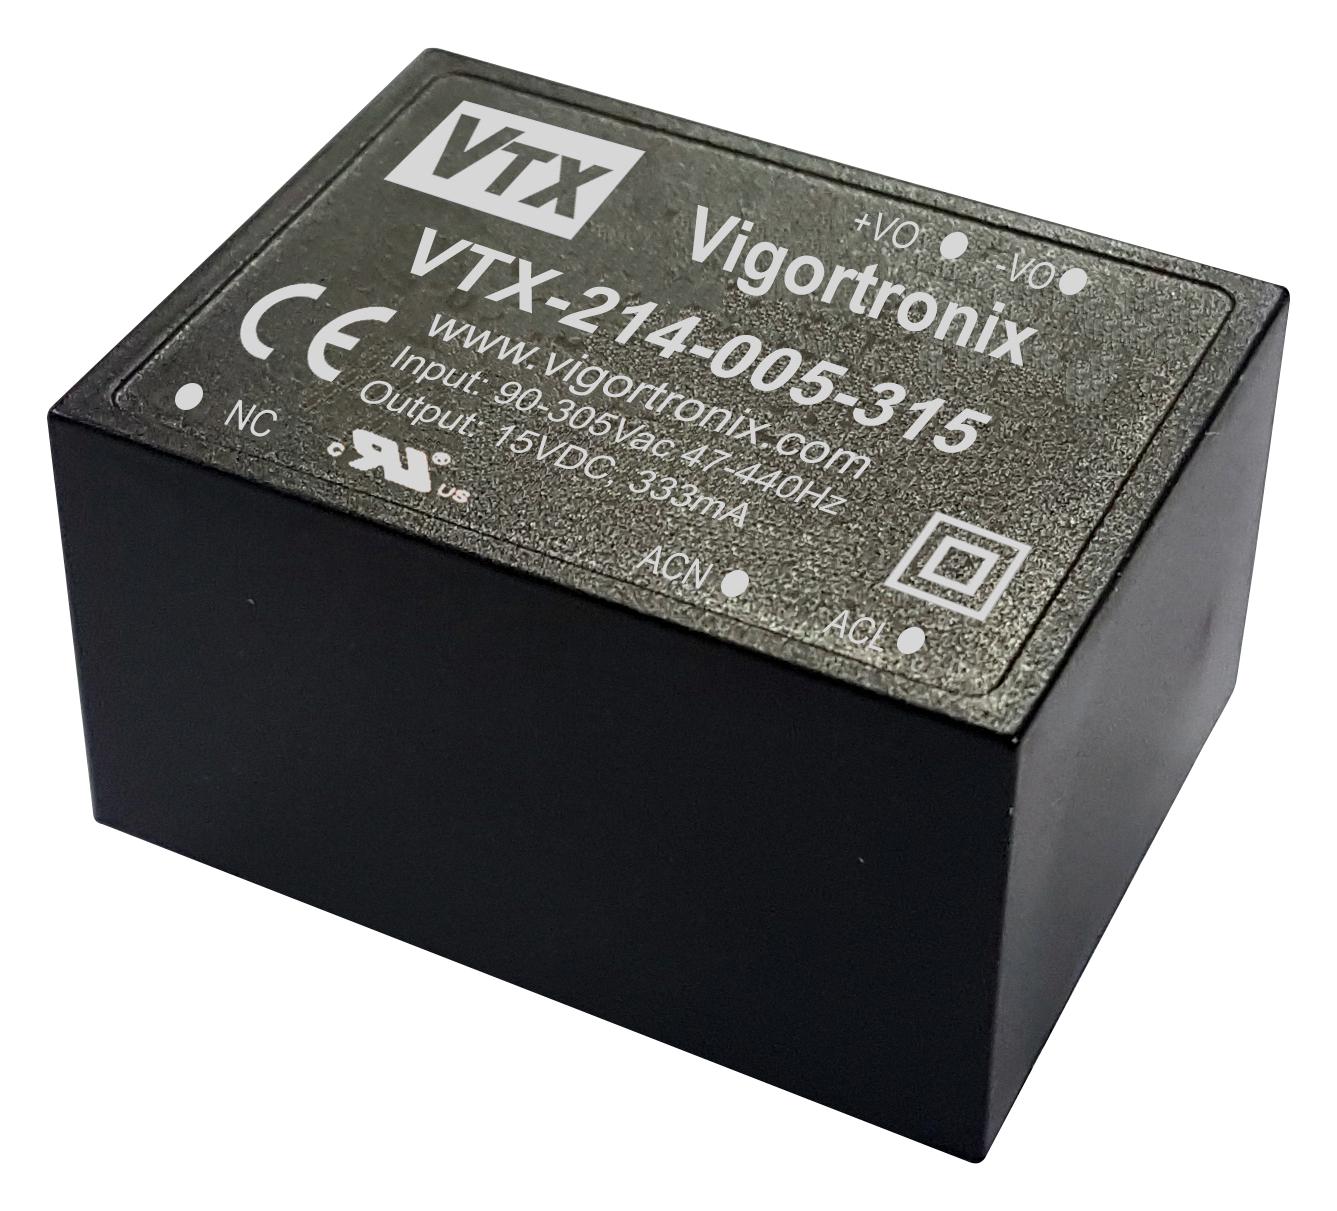 VTX-214-005-324